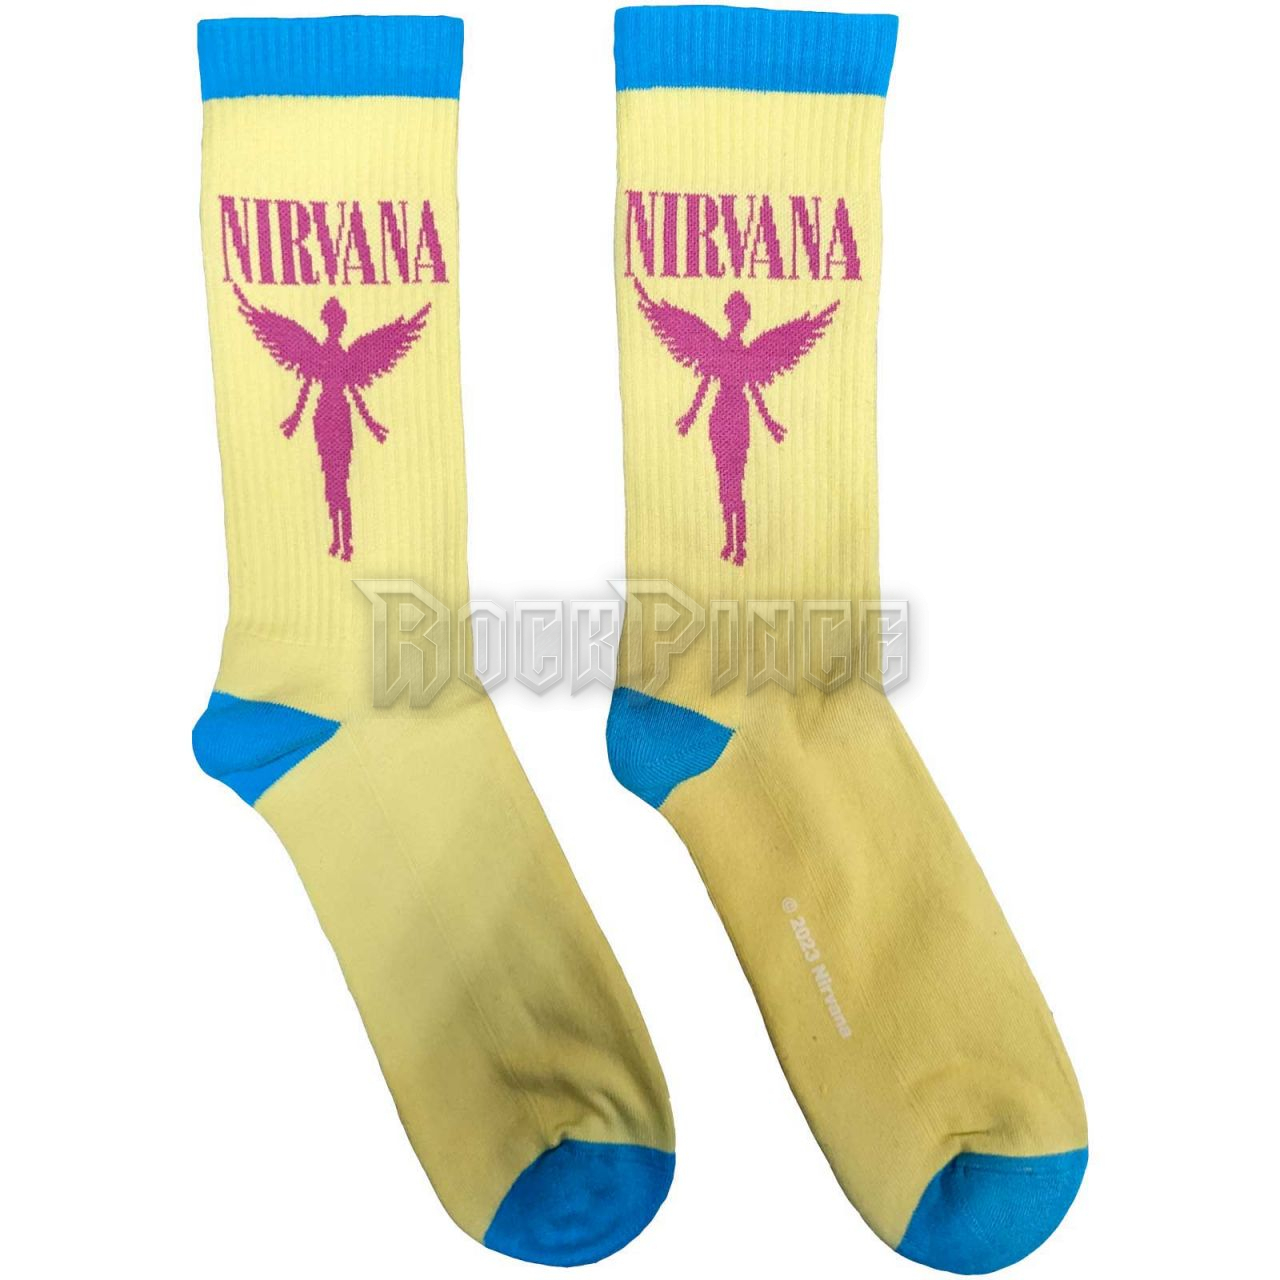 Nirvana - Angelic - unisex bokazokni (egy méret: 40-45) - NIRVSCK08MY